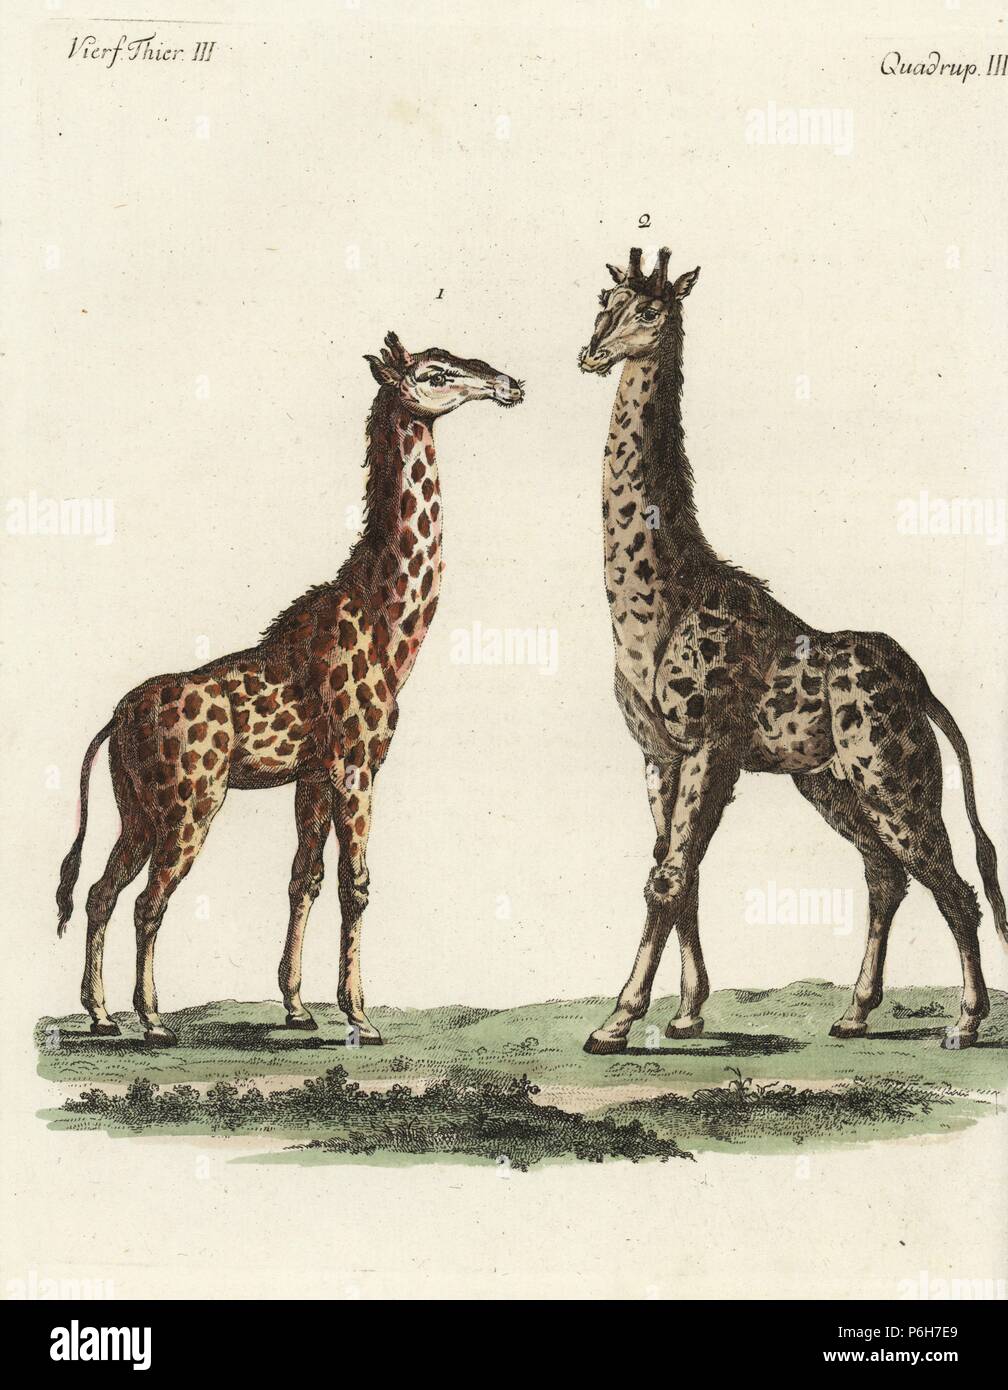 Giraffe, Giraffa camelopardalis, female 1 and male 2. Handcoloured copperplate engraving from Friedrich Johann Bertuch's 'Bilderbuch fur Kinder' (Picture Book for Children), Weimar, 1792. Stock Photo